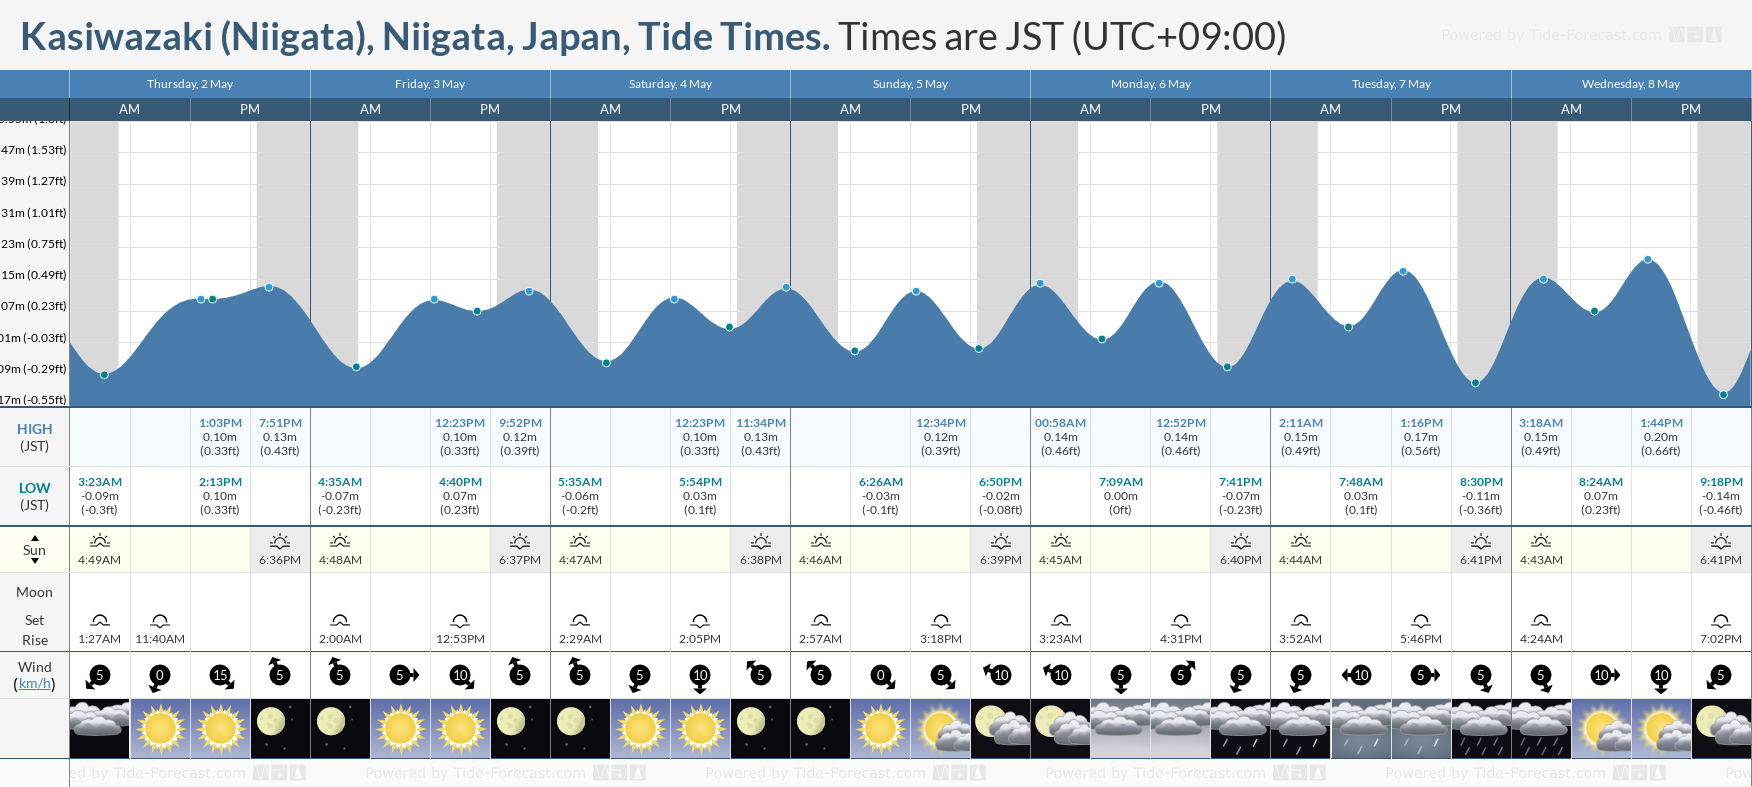 Kasiwazaki (Niigata), Niigata, Japan Tide Chart including high and low tide tide times for the next 7 days